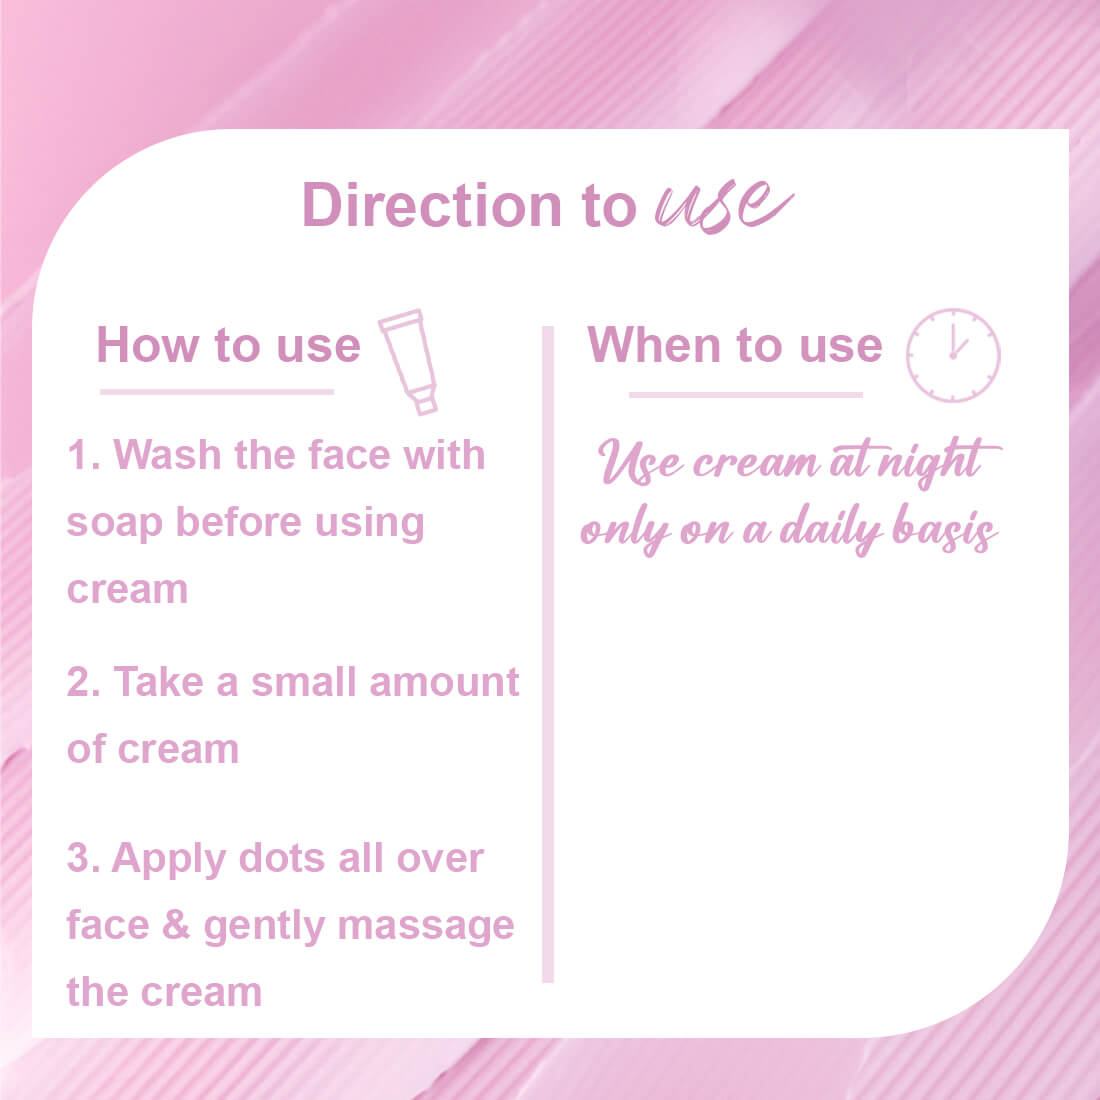 Melas Perfect skincare combo( Night cream & Soap) |Oil Free Balanced & Nourished Skin